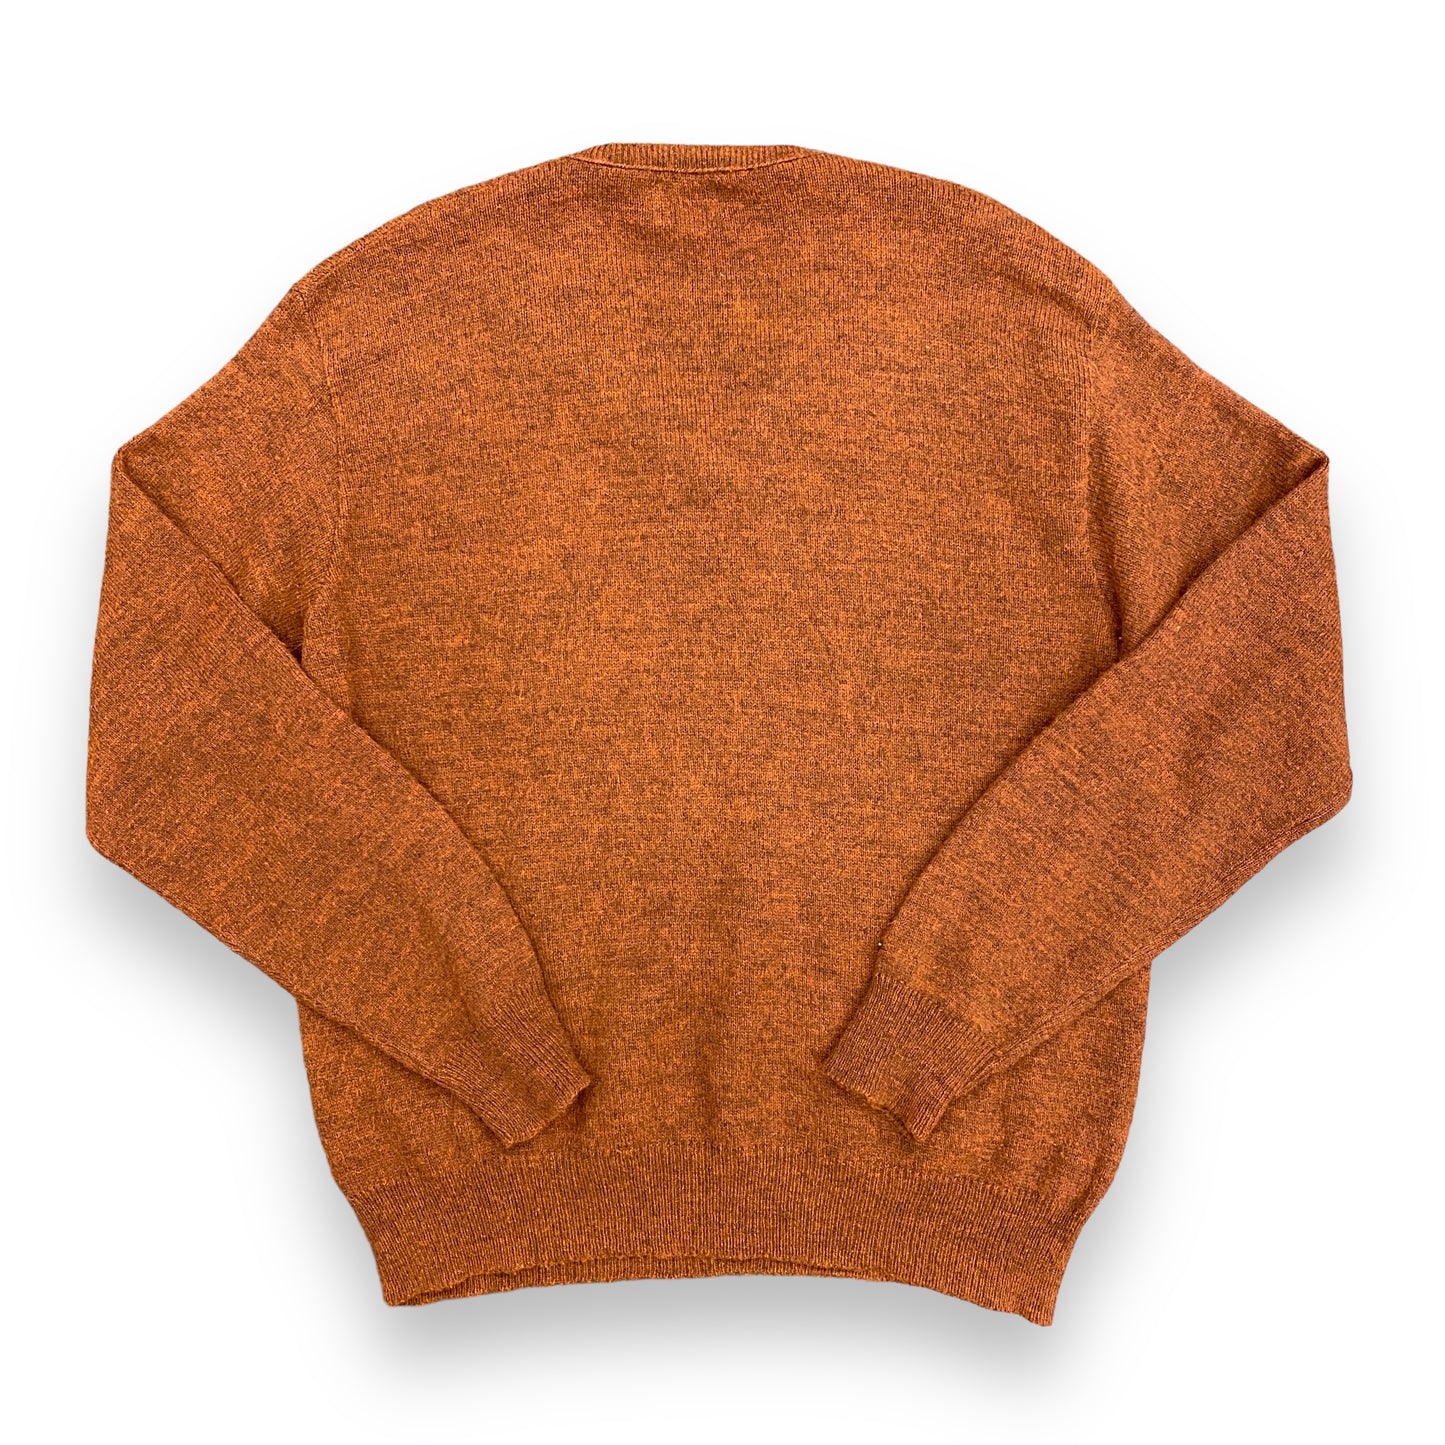 VTG Puritan "Lamblend" Burnt Orange Sweater - Size XL